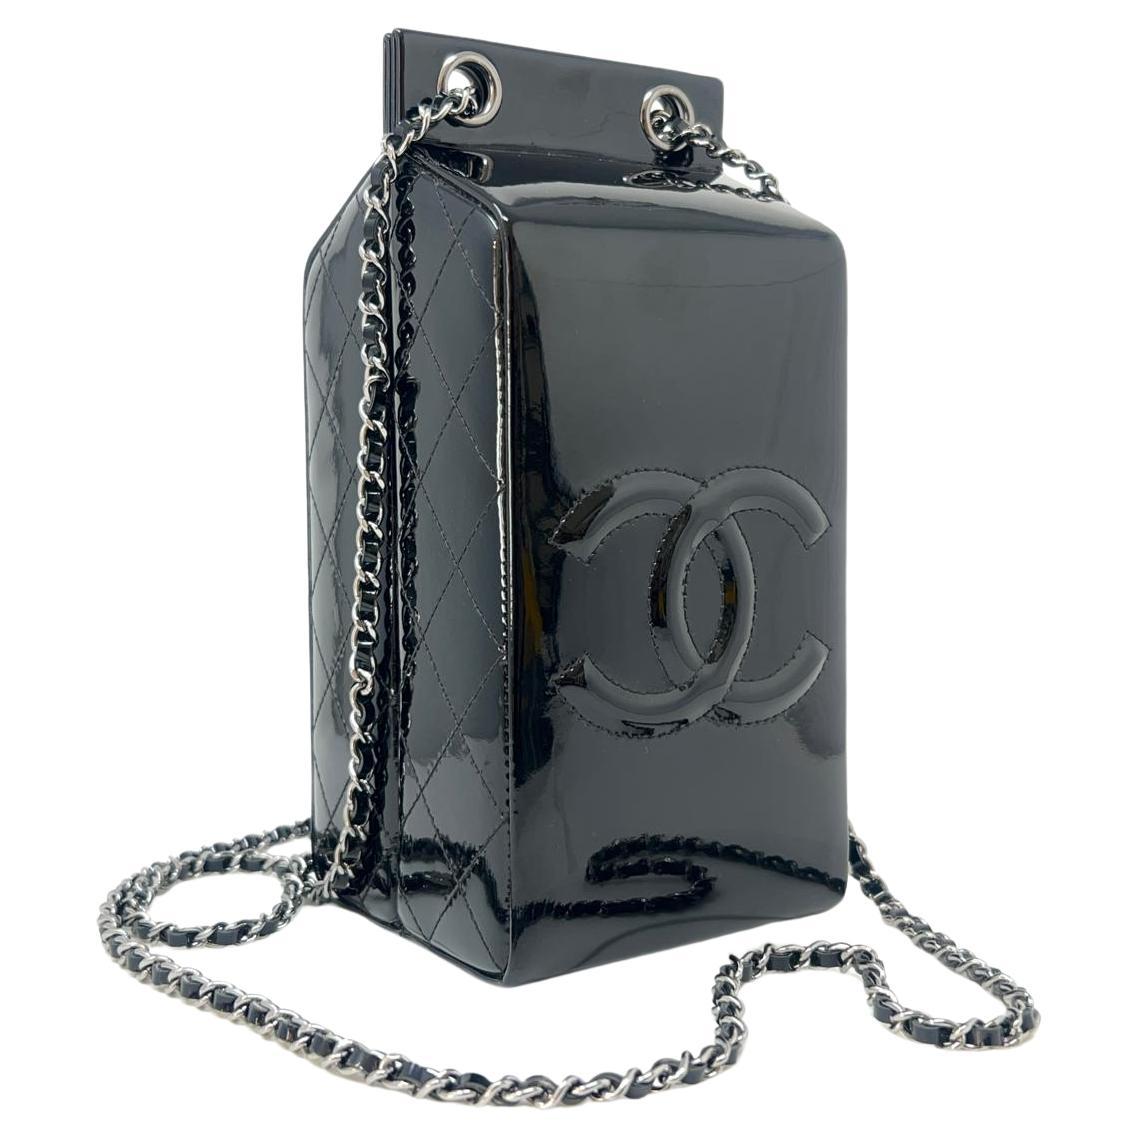 Chanel Black Patent Milk Carton Bag Silver Hardware Fall / Winter 2014